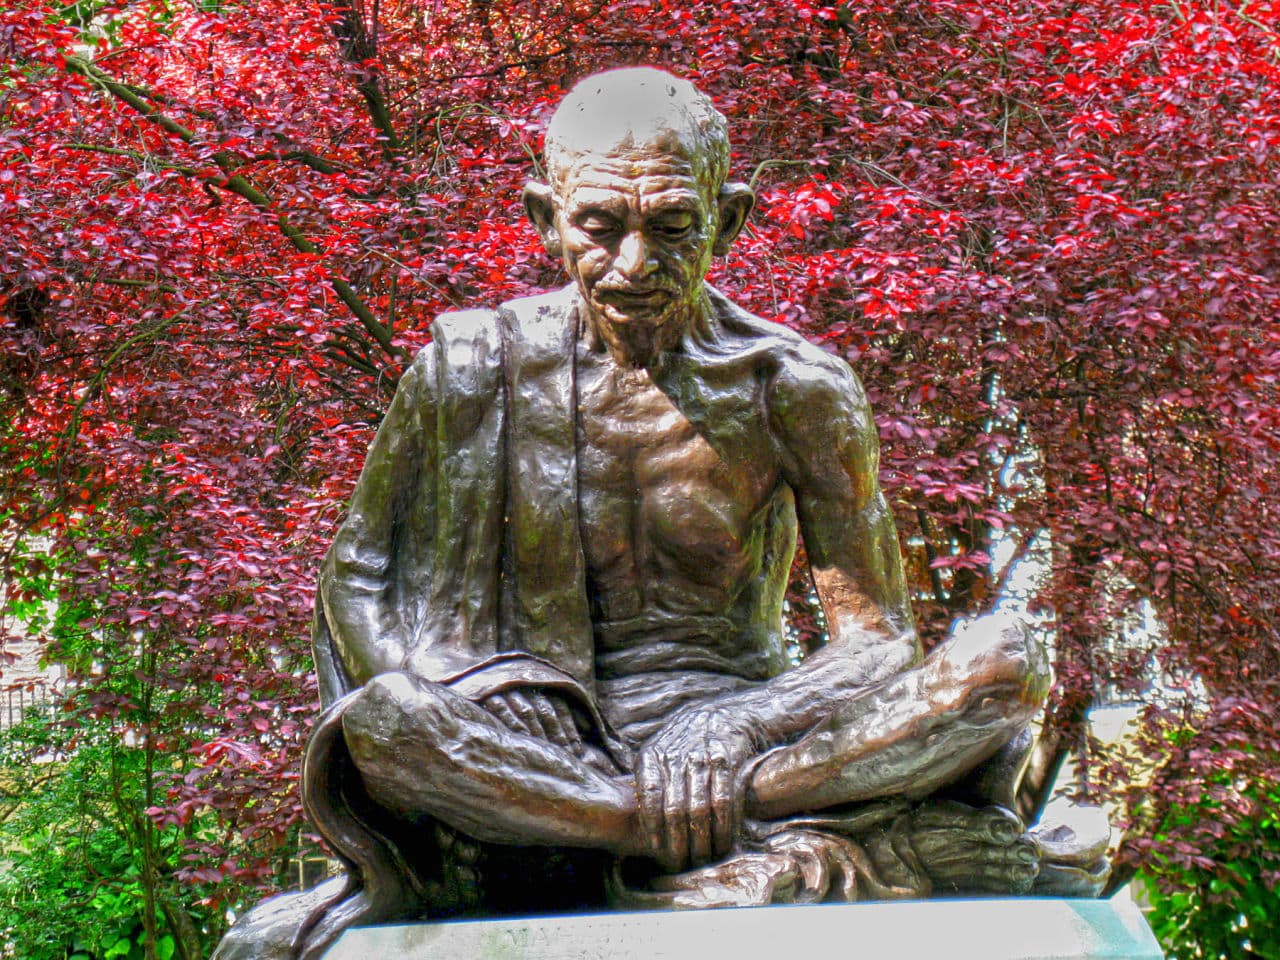 A monument to Mohandas Gandhi in Tavistock Square. (mira66/flickr)